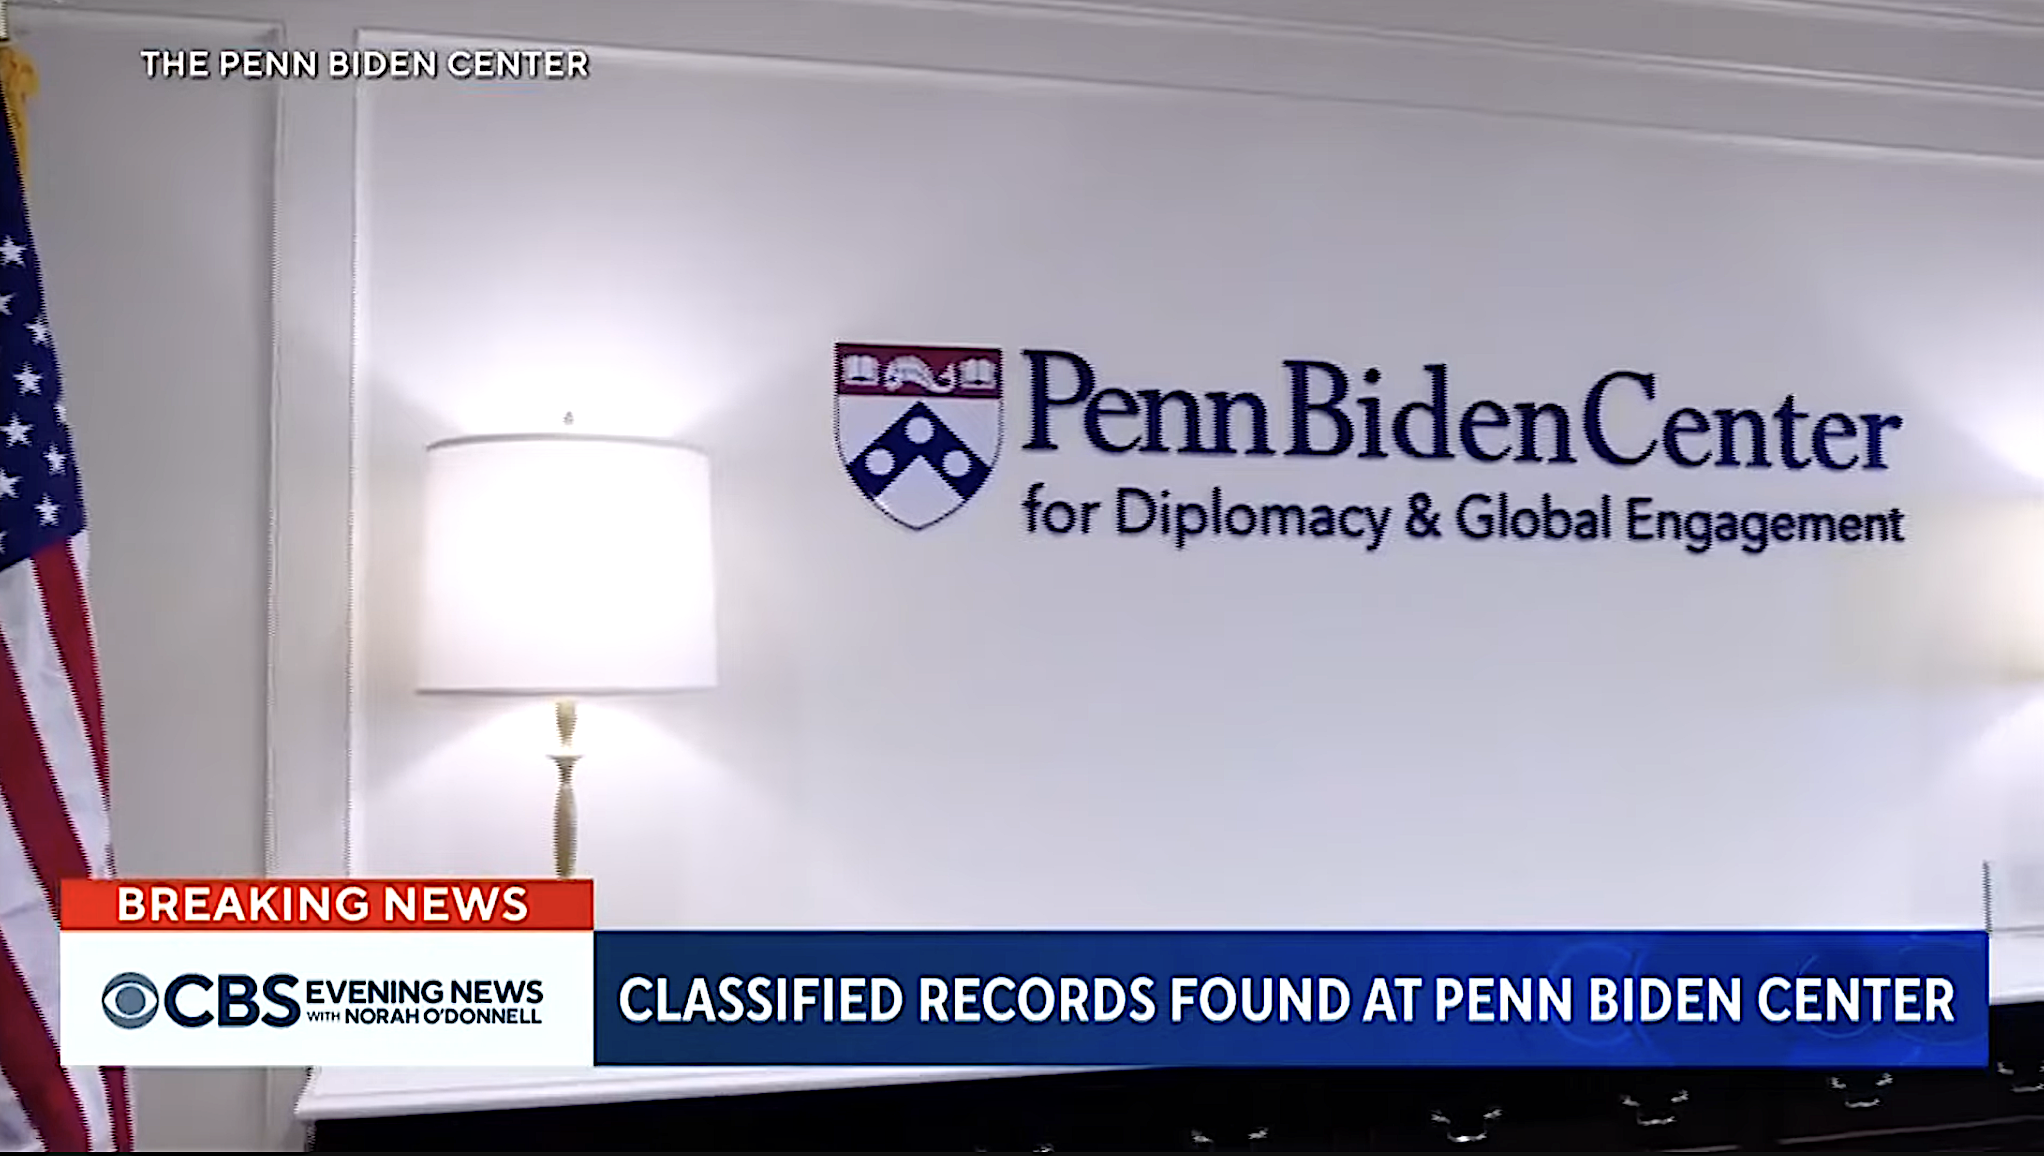 Classified documents found at Penn Biden Center